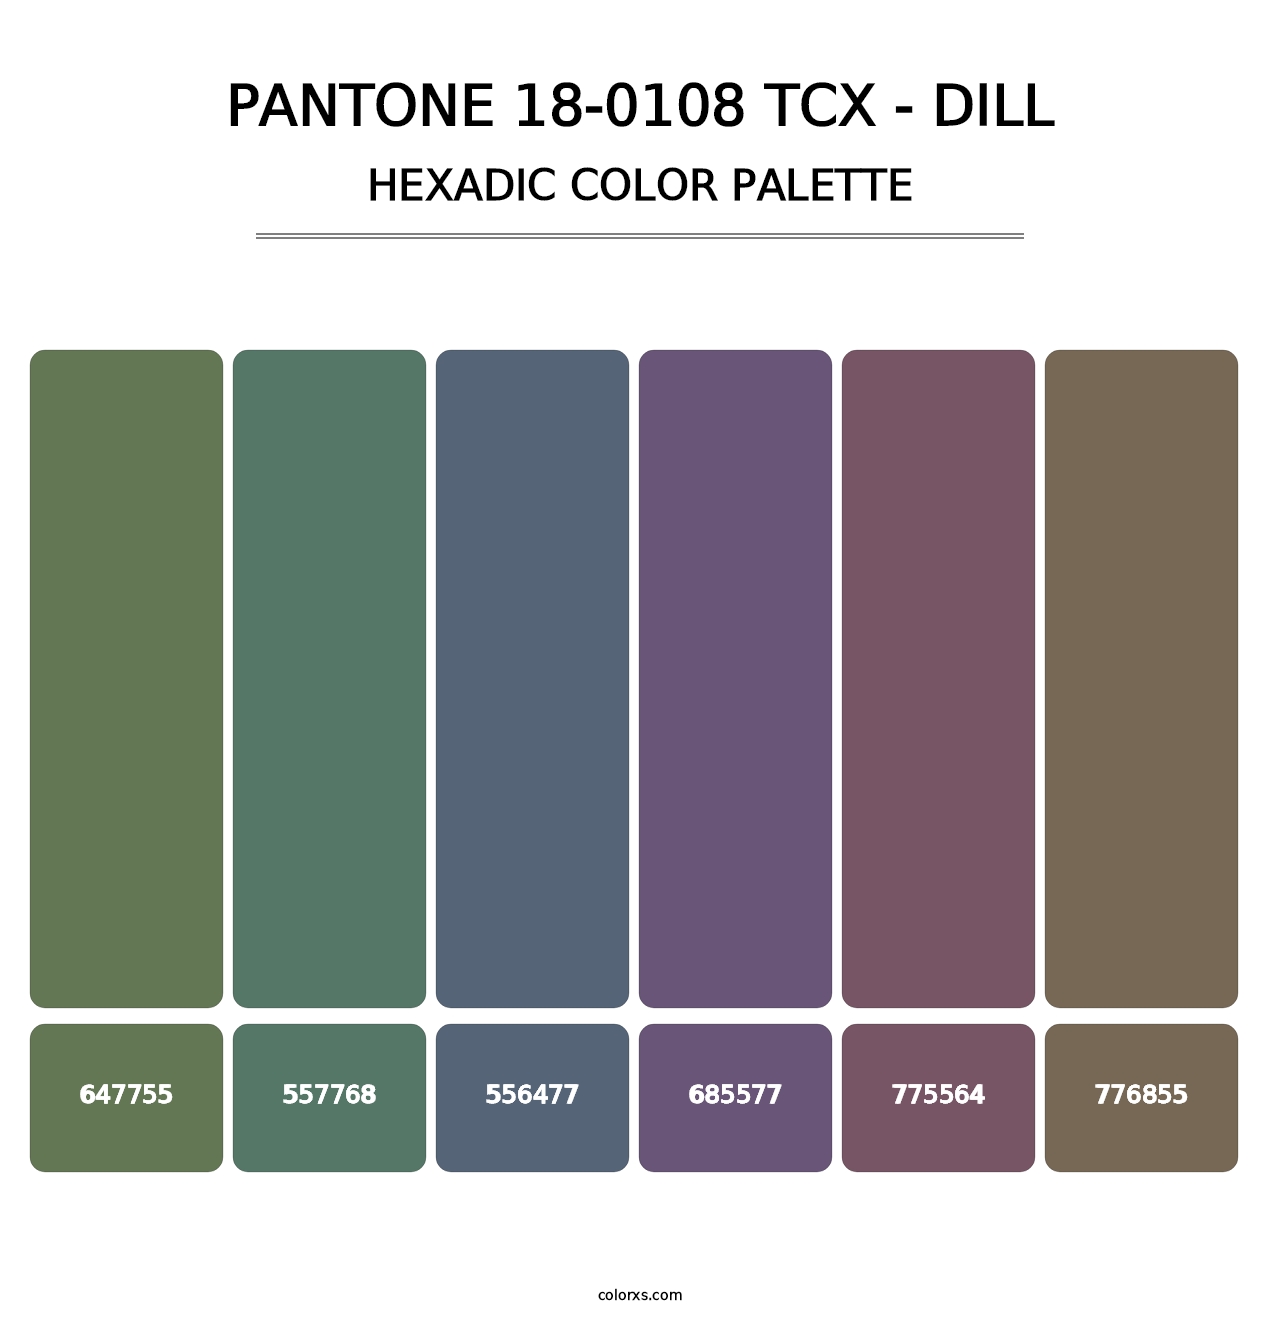 PANTONE 18-0108 TCX - Dill - Hexadic Color Palette